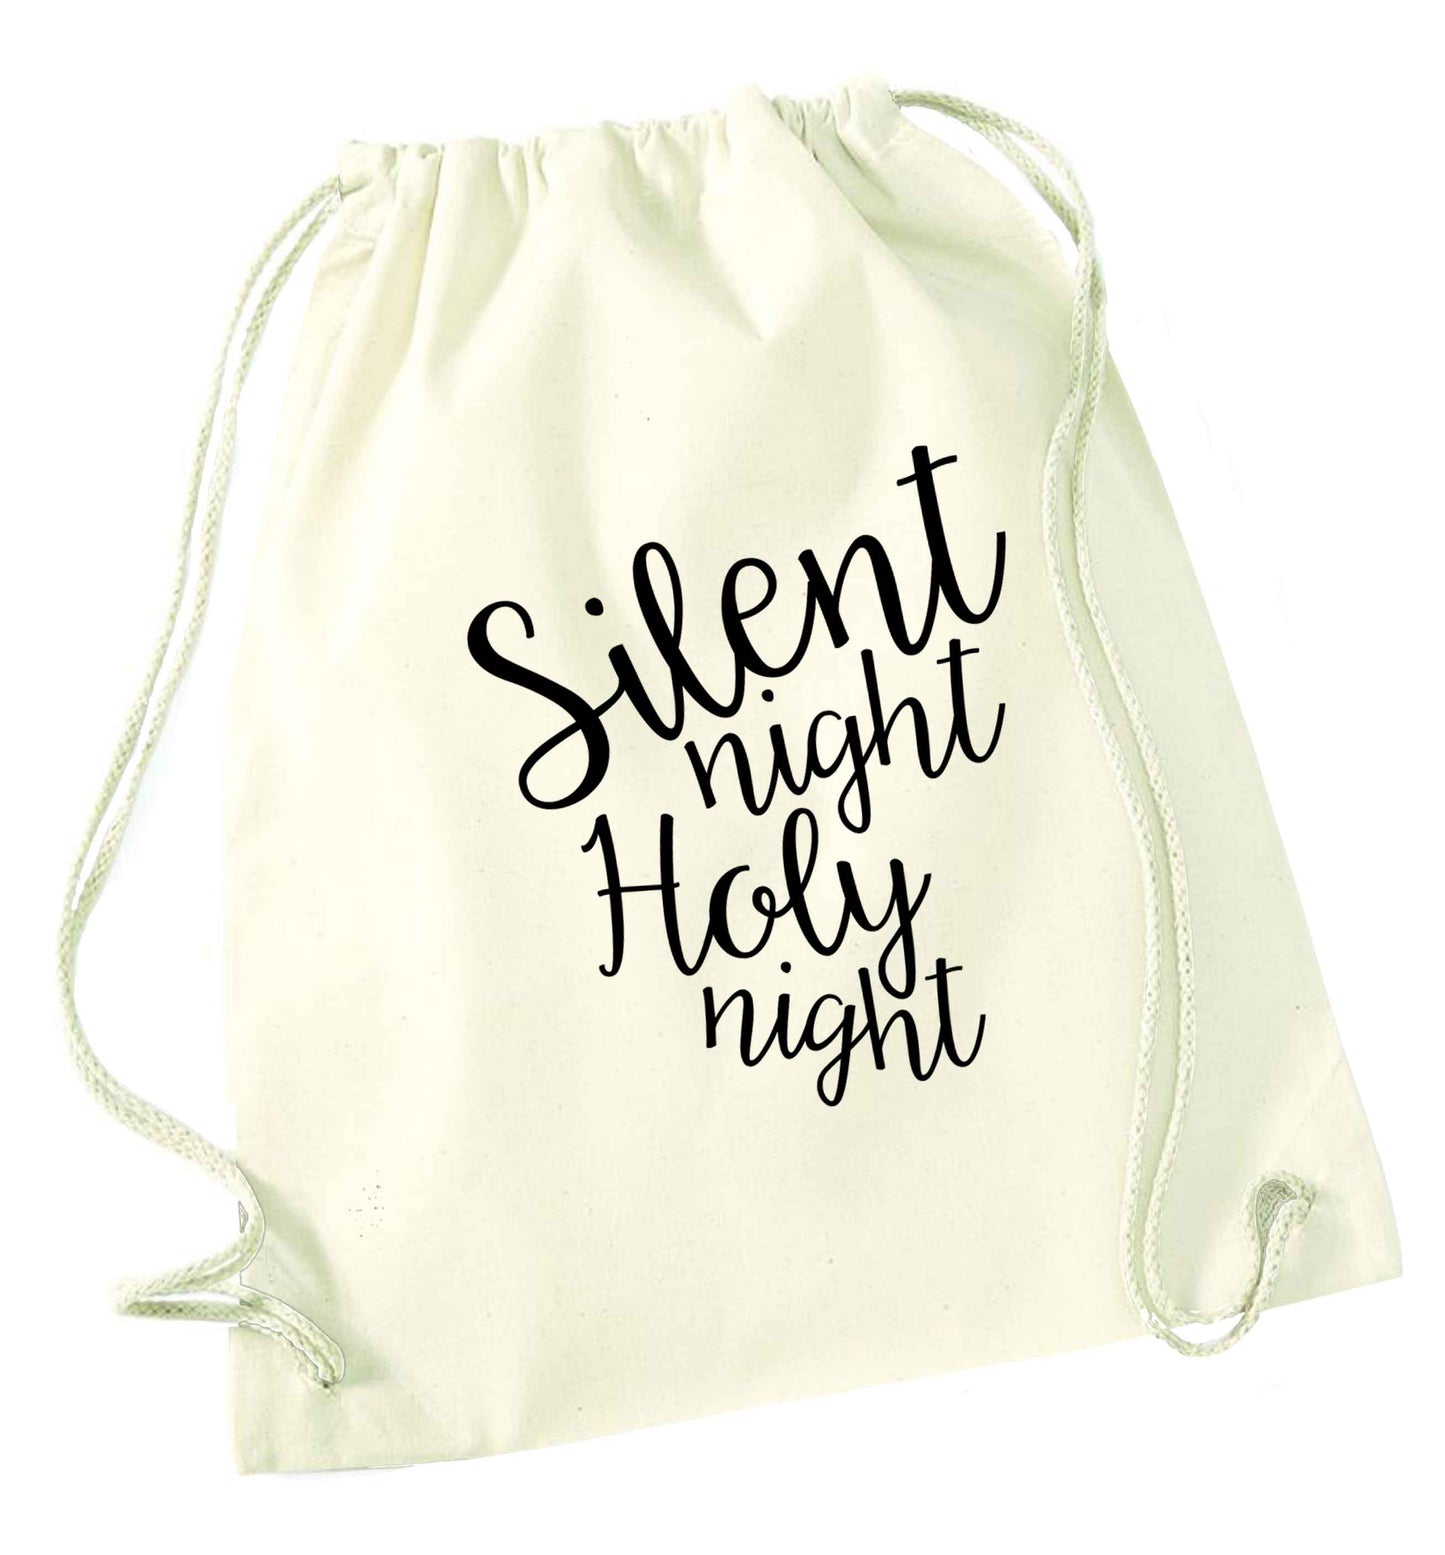 Silent night holy night natural drawstring bag